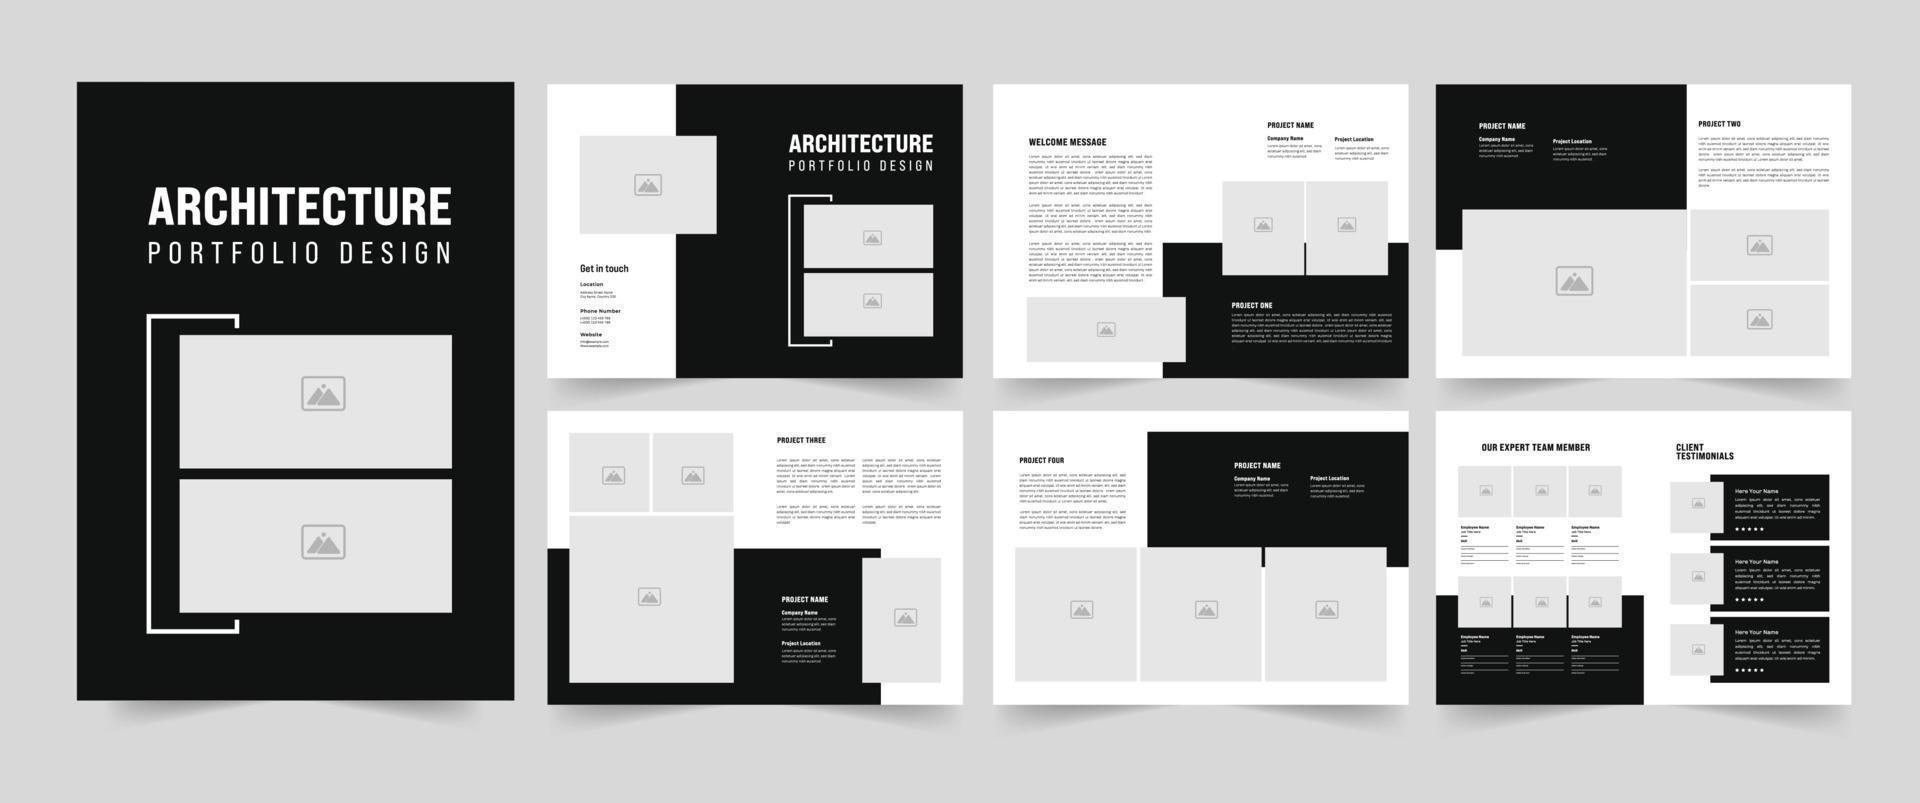 Architecture Portfolio Layout Design vector